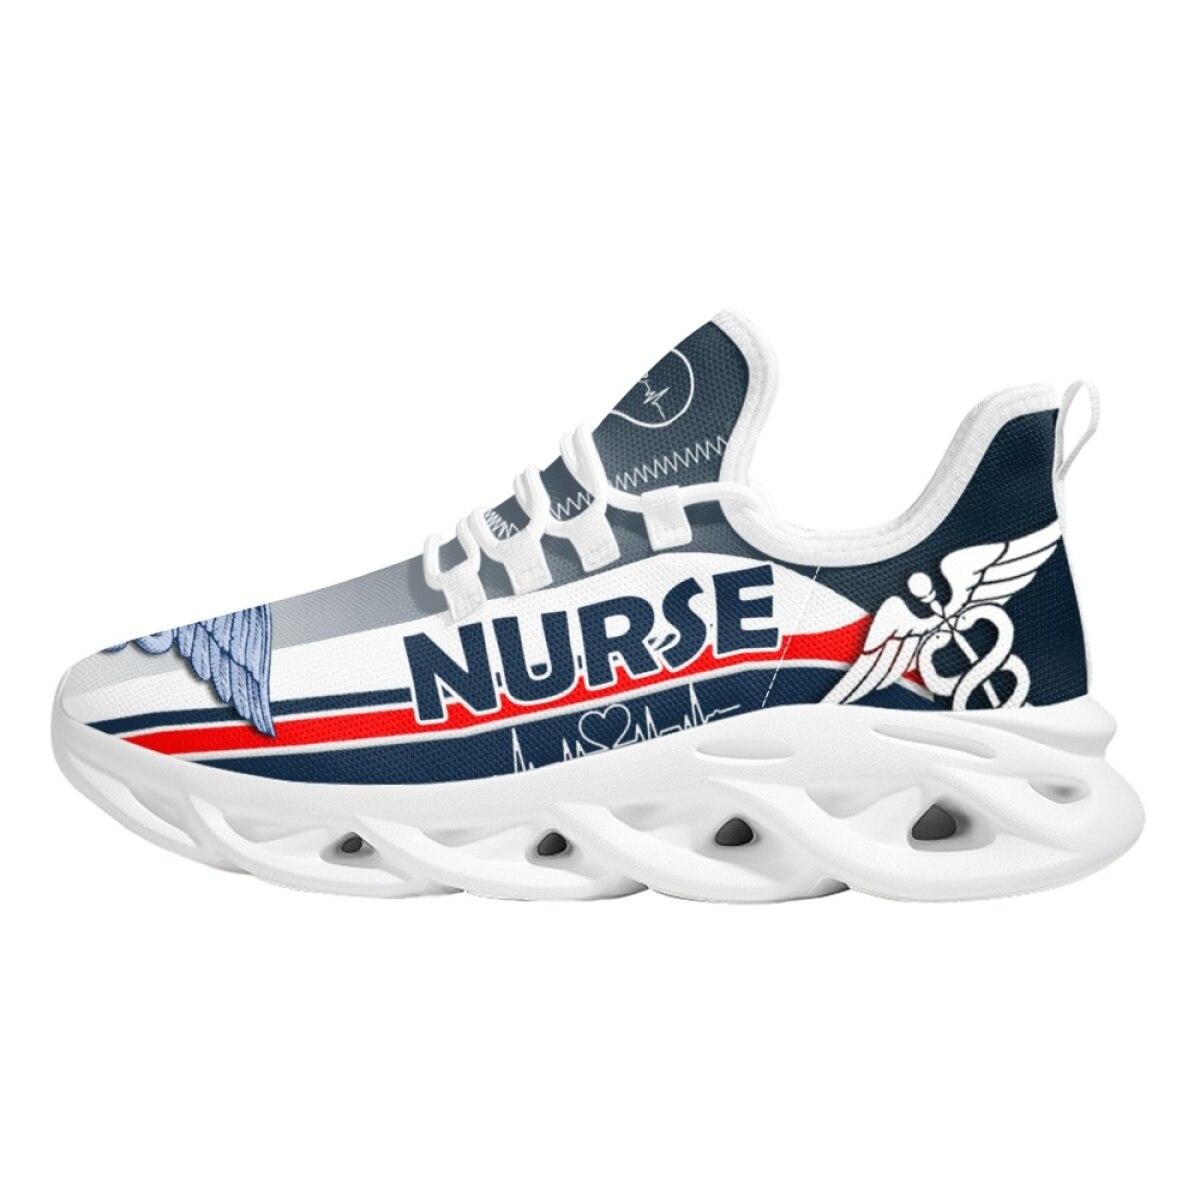 Fashion Nurse Shoes for Women EMT Paramedic Pattern Men Women Flat Shoes Lightweight Running Sneakers Casual Zapatos